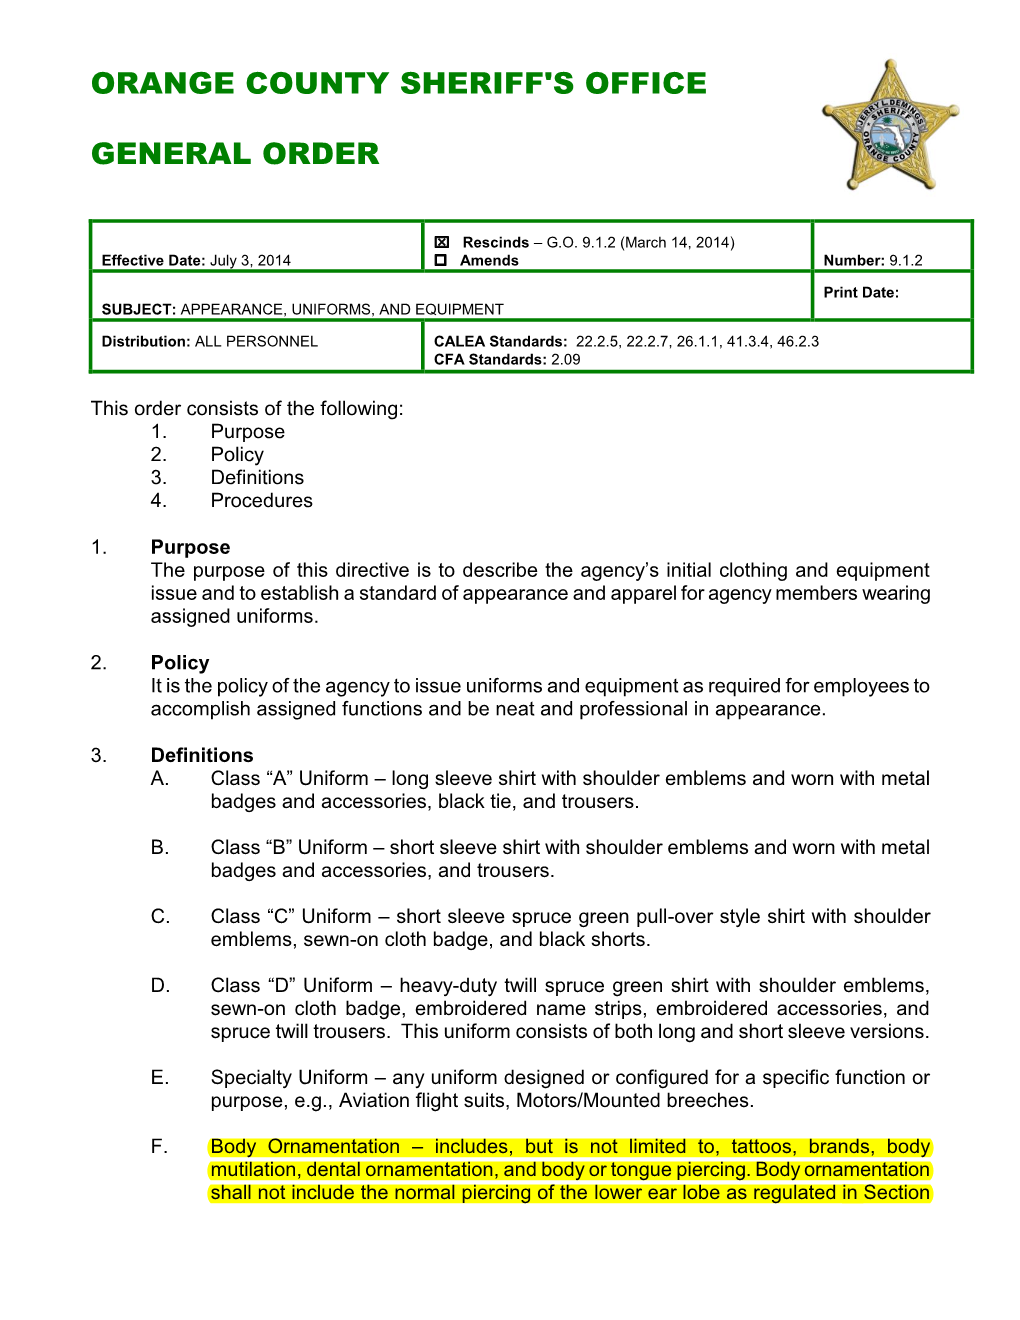 Orange County Sheriff's Office General Order